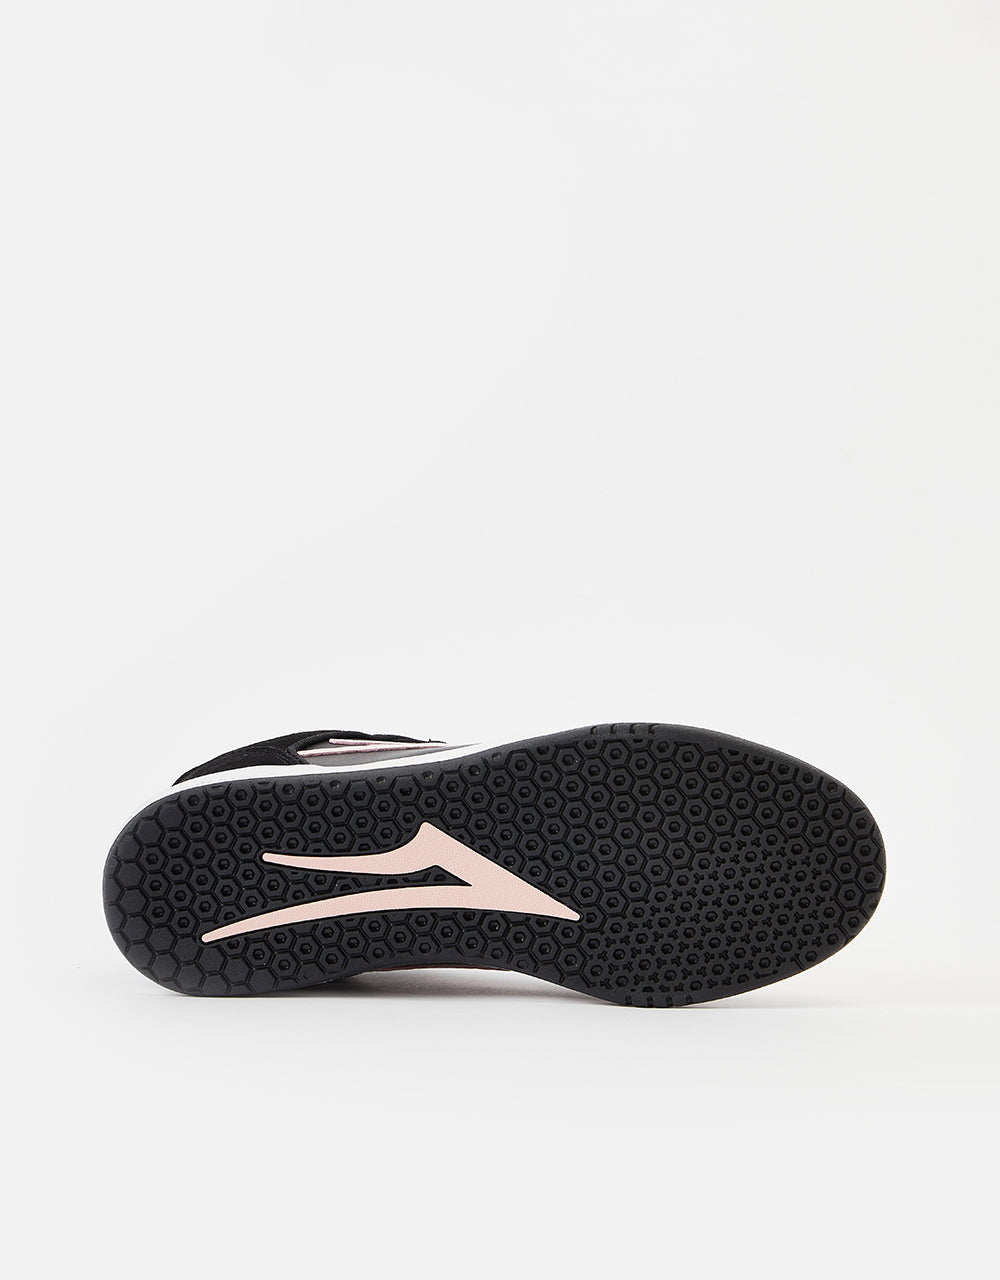 Lakai Telford Low Skate Shoes - Black/Pink Suede